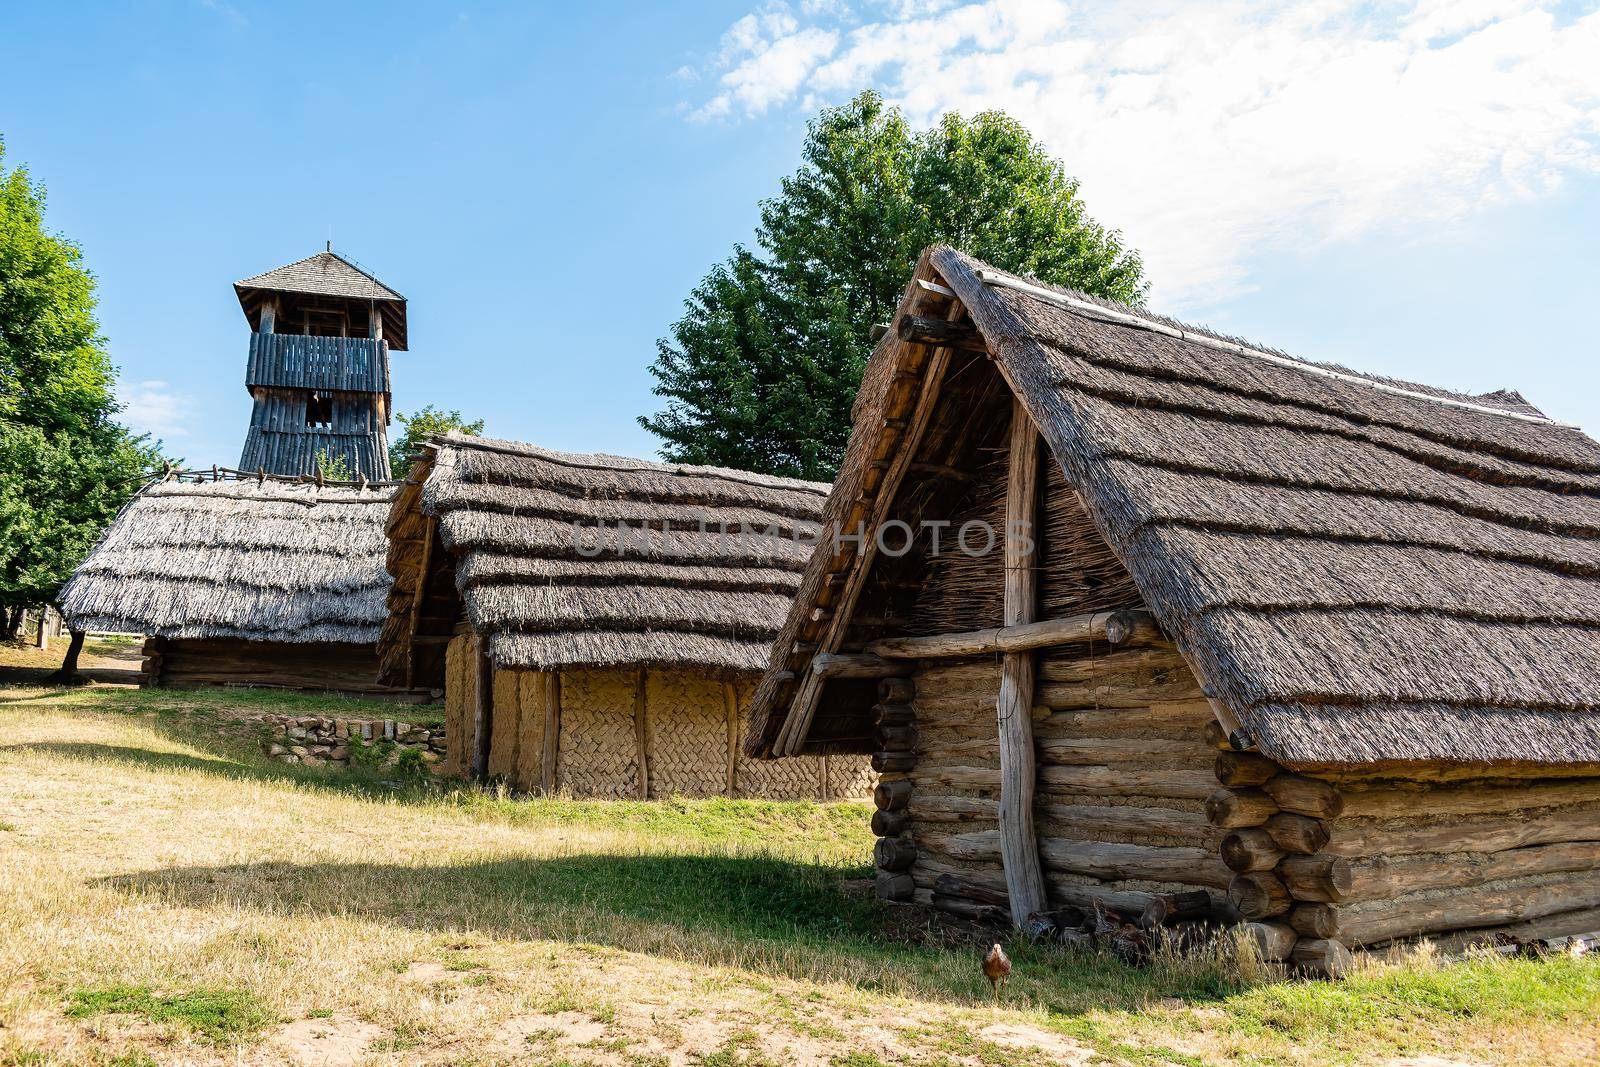 Modra, open-air museum of Great Moravia. Wooden huts in the Museum of Great Moravia Modra